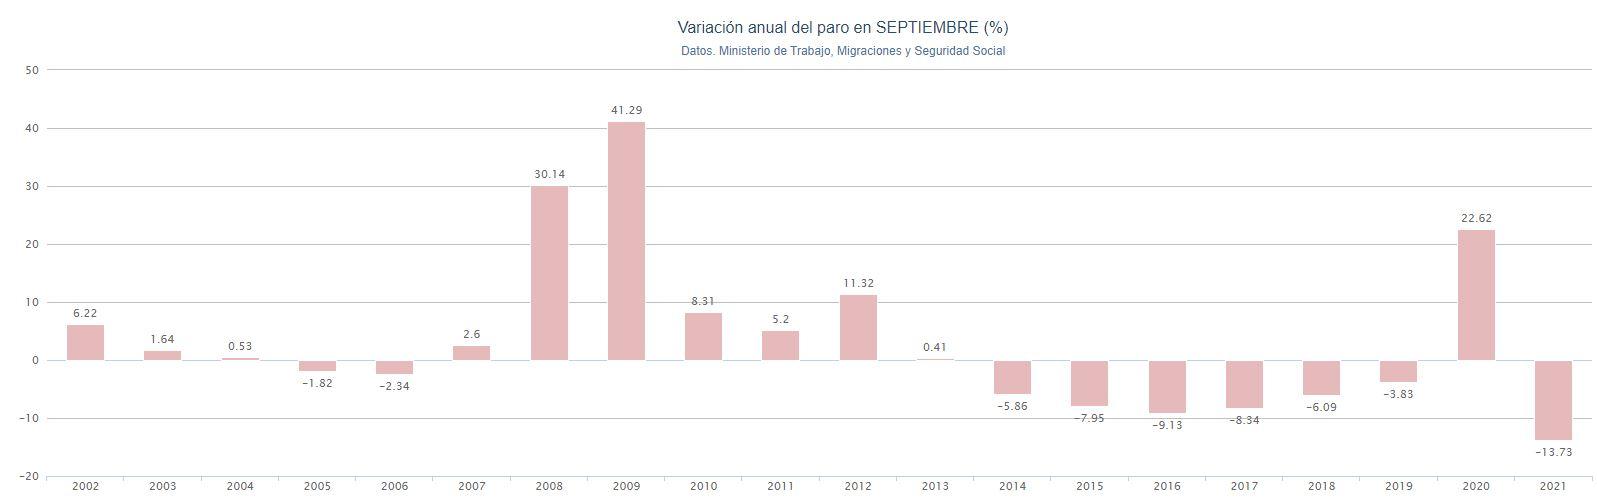 Gráfico variación anual tasa de paro septiembre. Porcentual